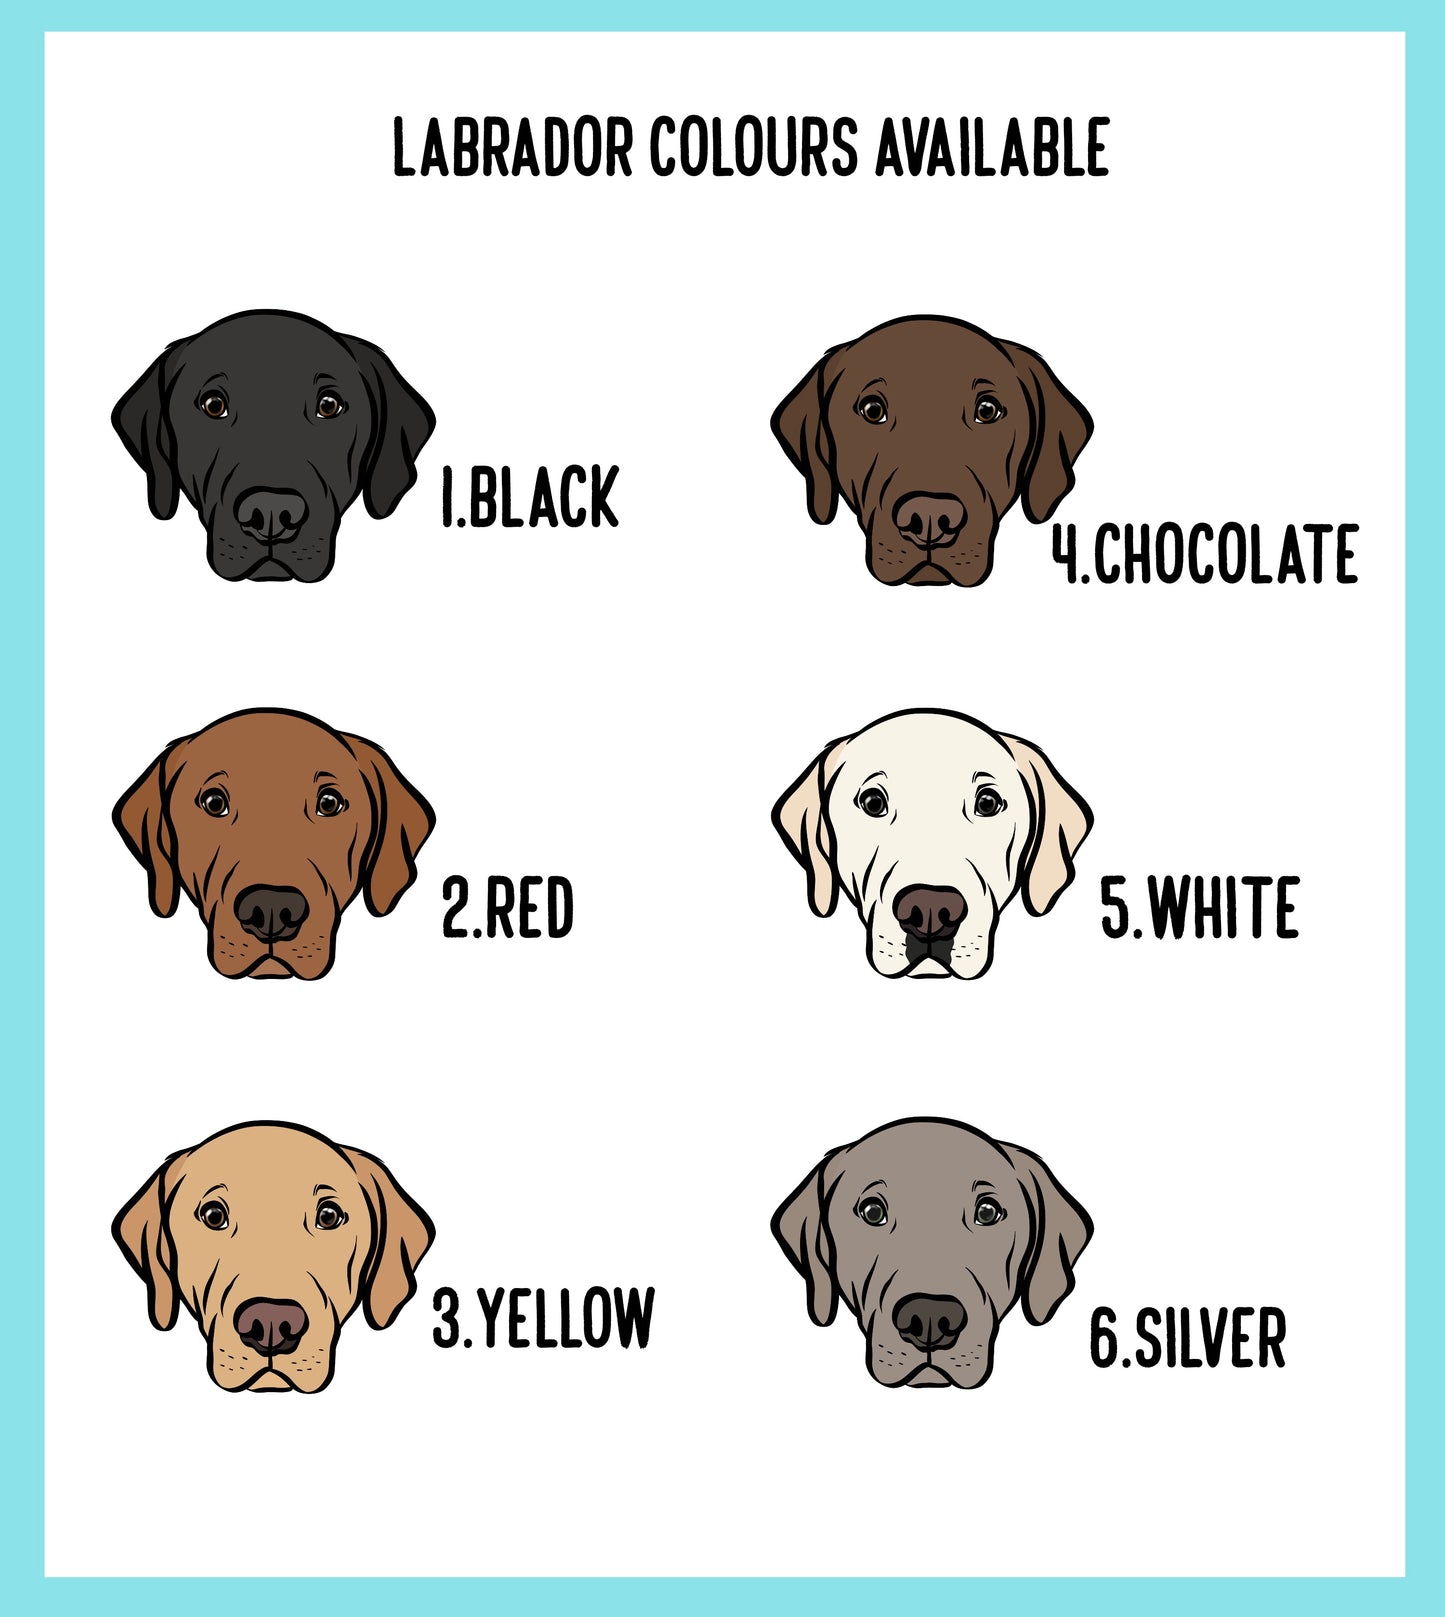 Personalised Labrador Mug